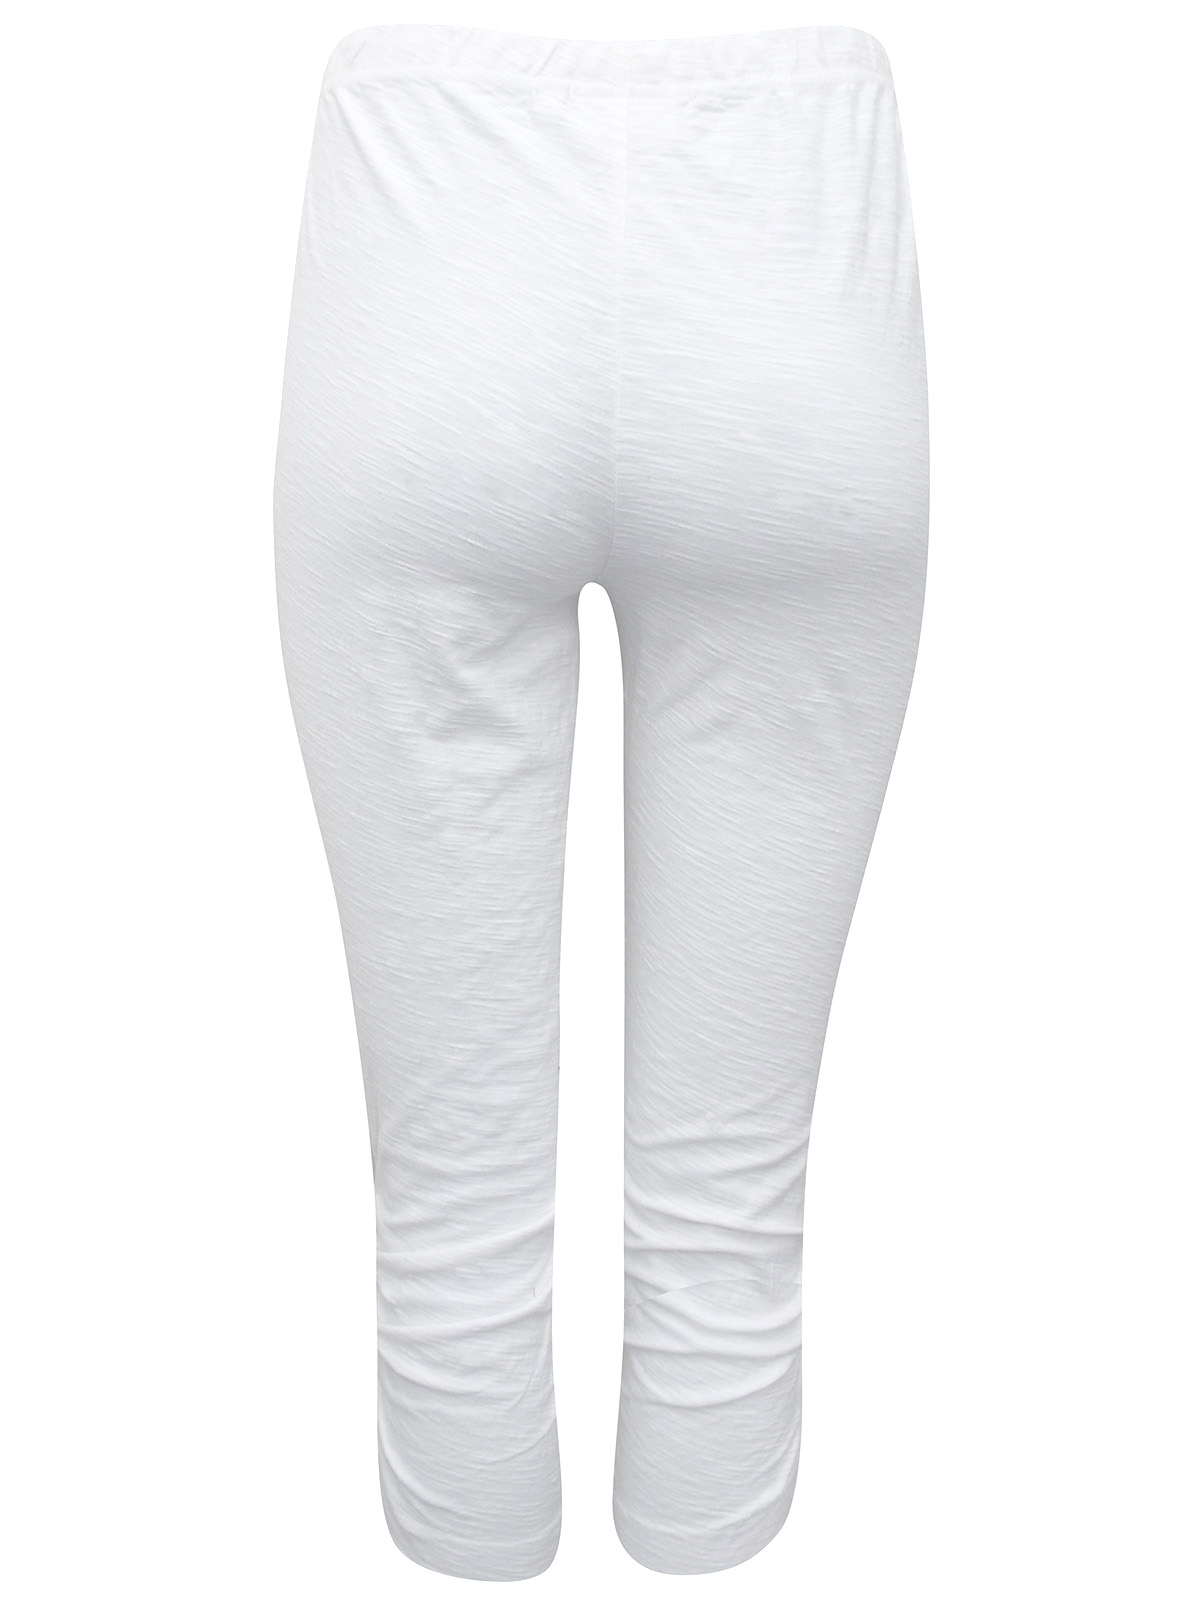 Wholesale Women's Opaque Capri Tights, White, One Size - DollarDays